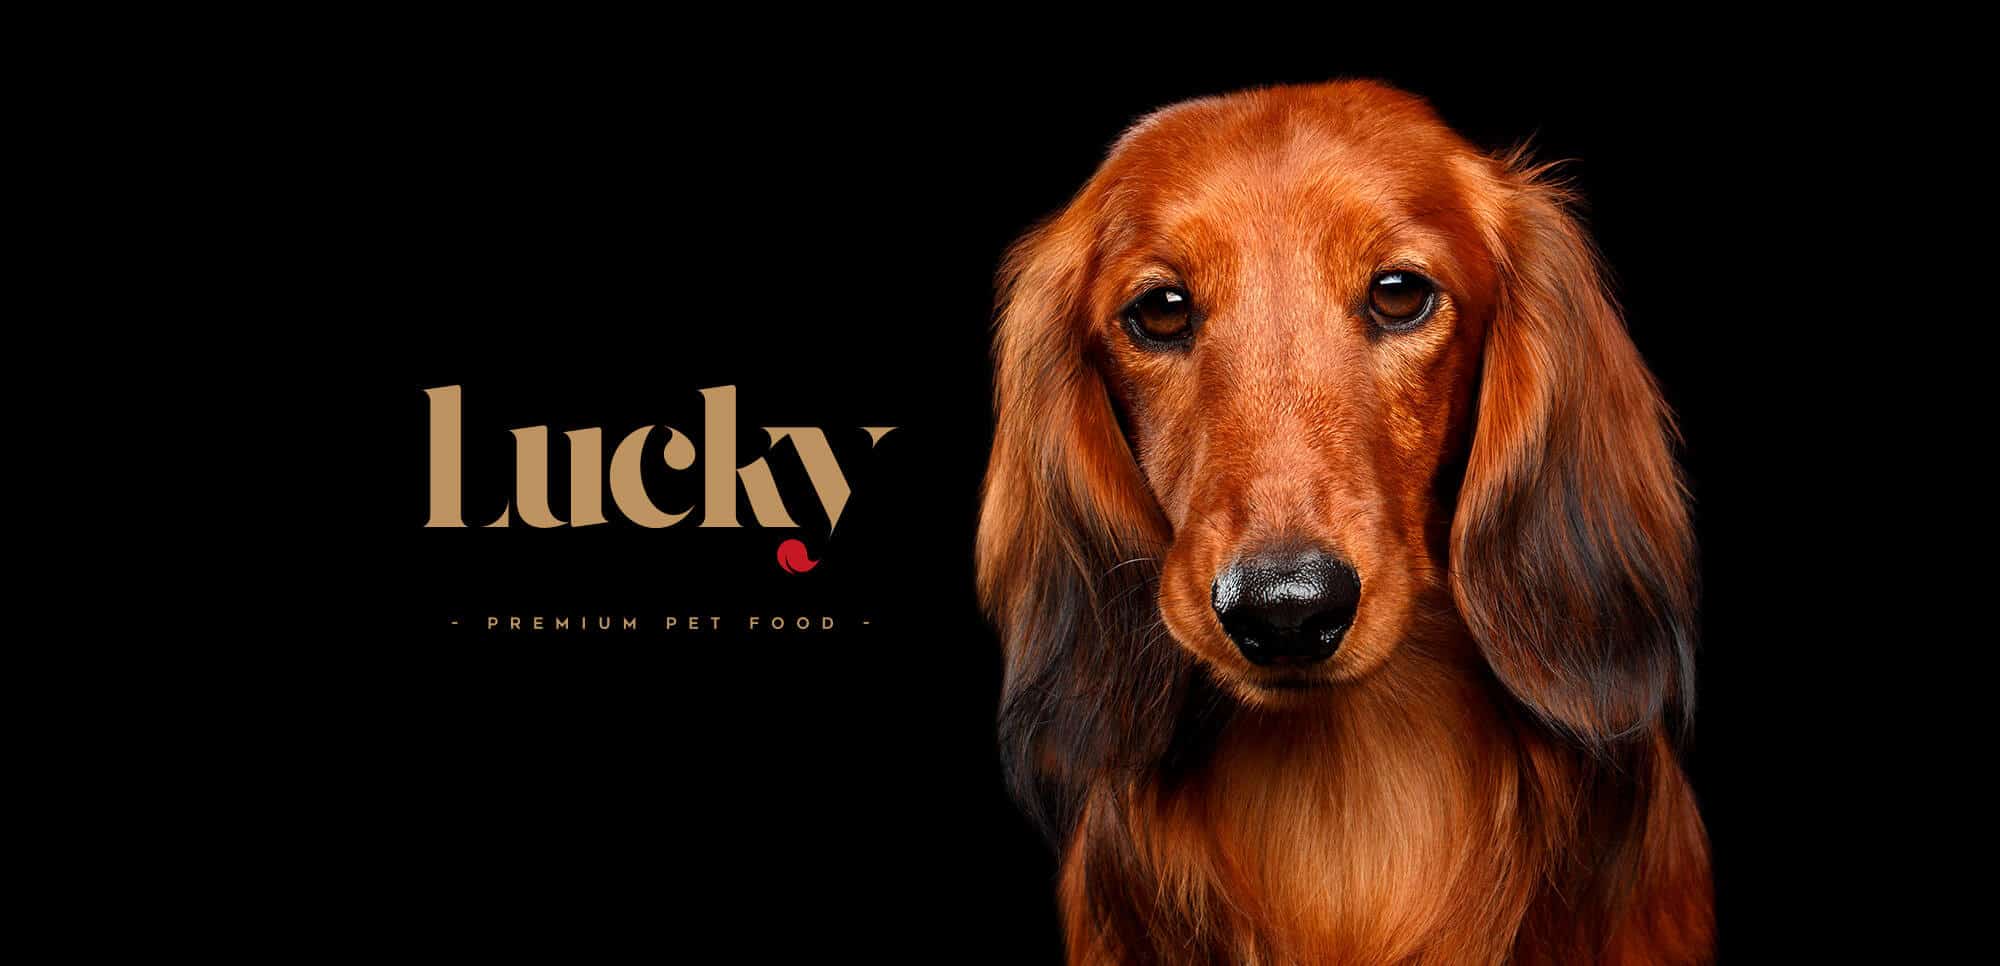 Lucky - Premium Pet Food